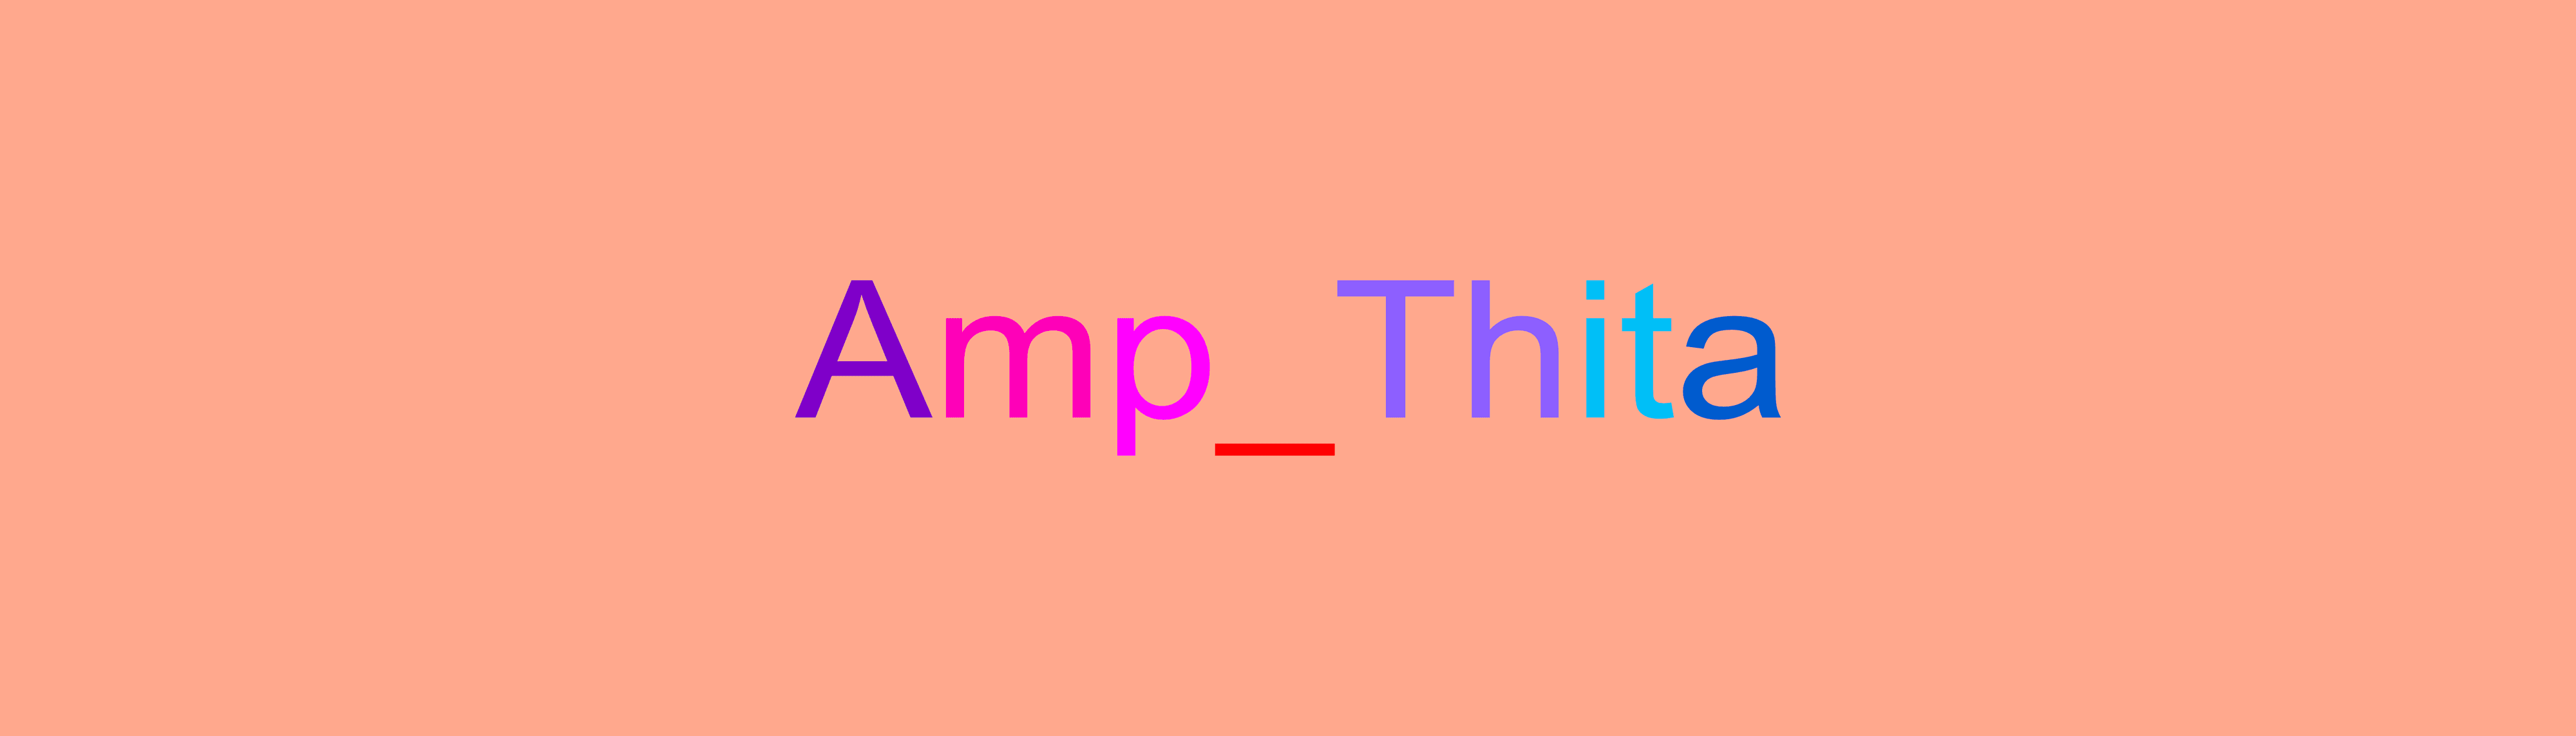 Amp_Thita banner